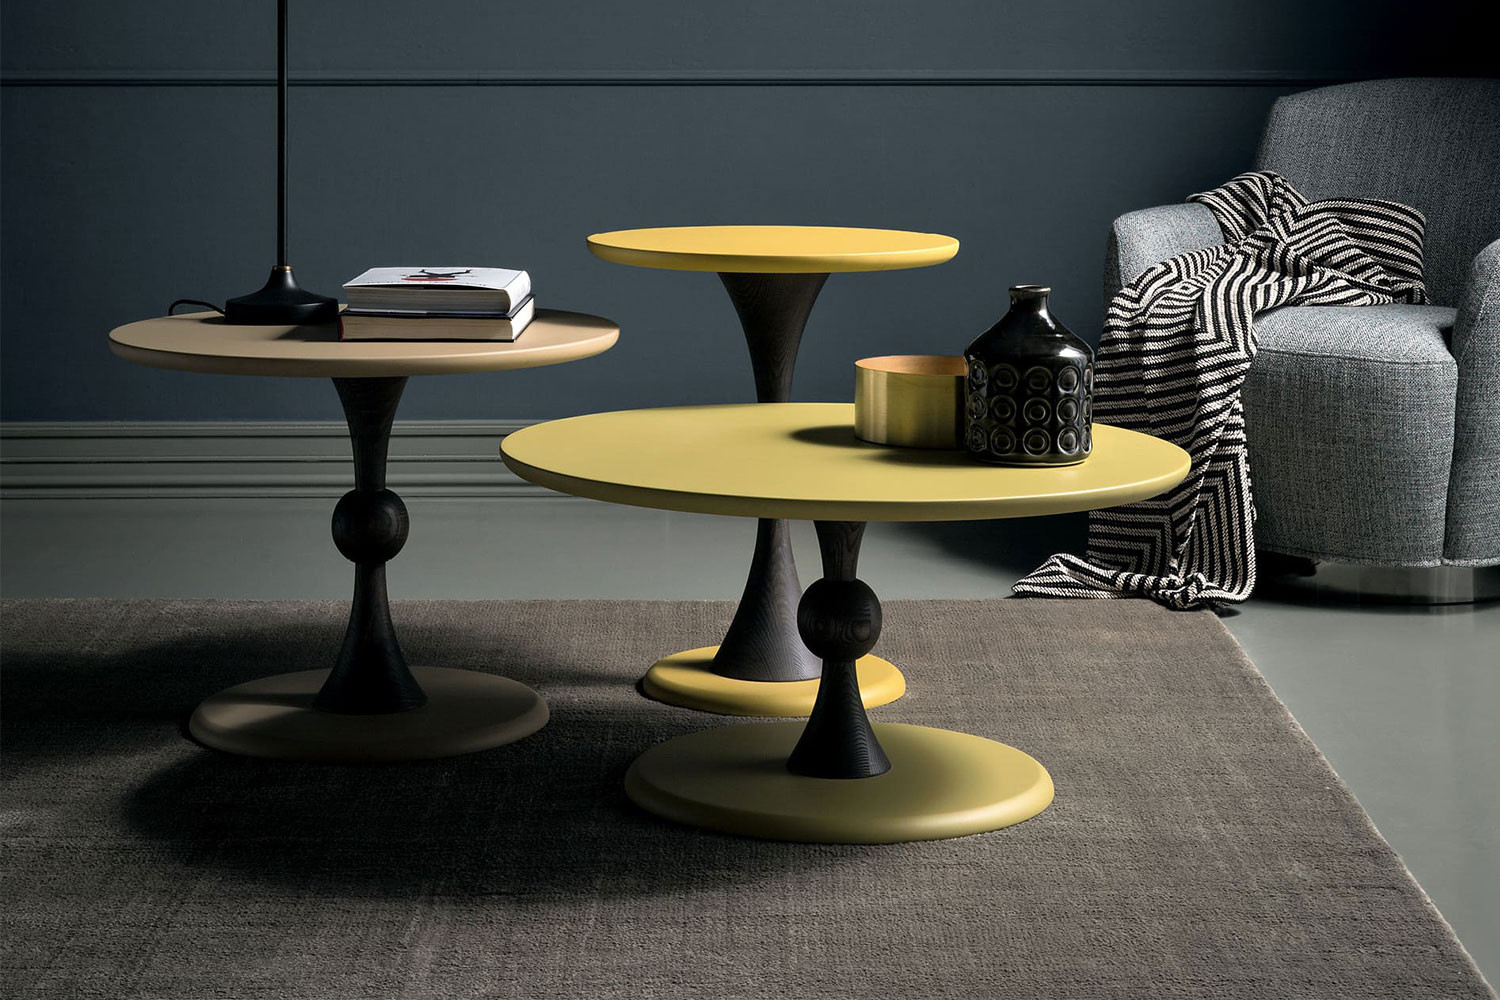 Clessidra, collezione di tavolini da caffè rotondi alti 60, 50 o 40 cm